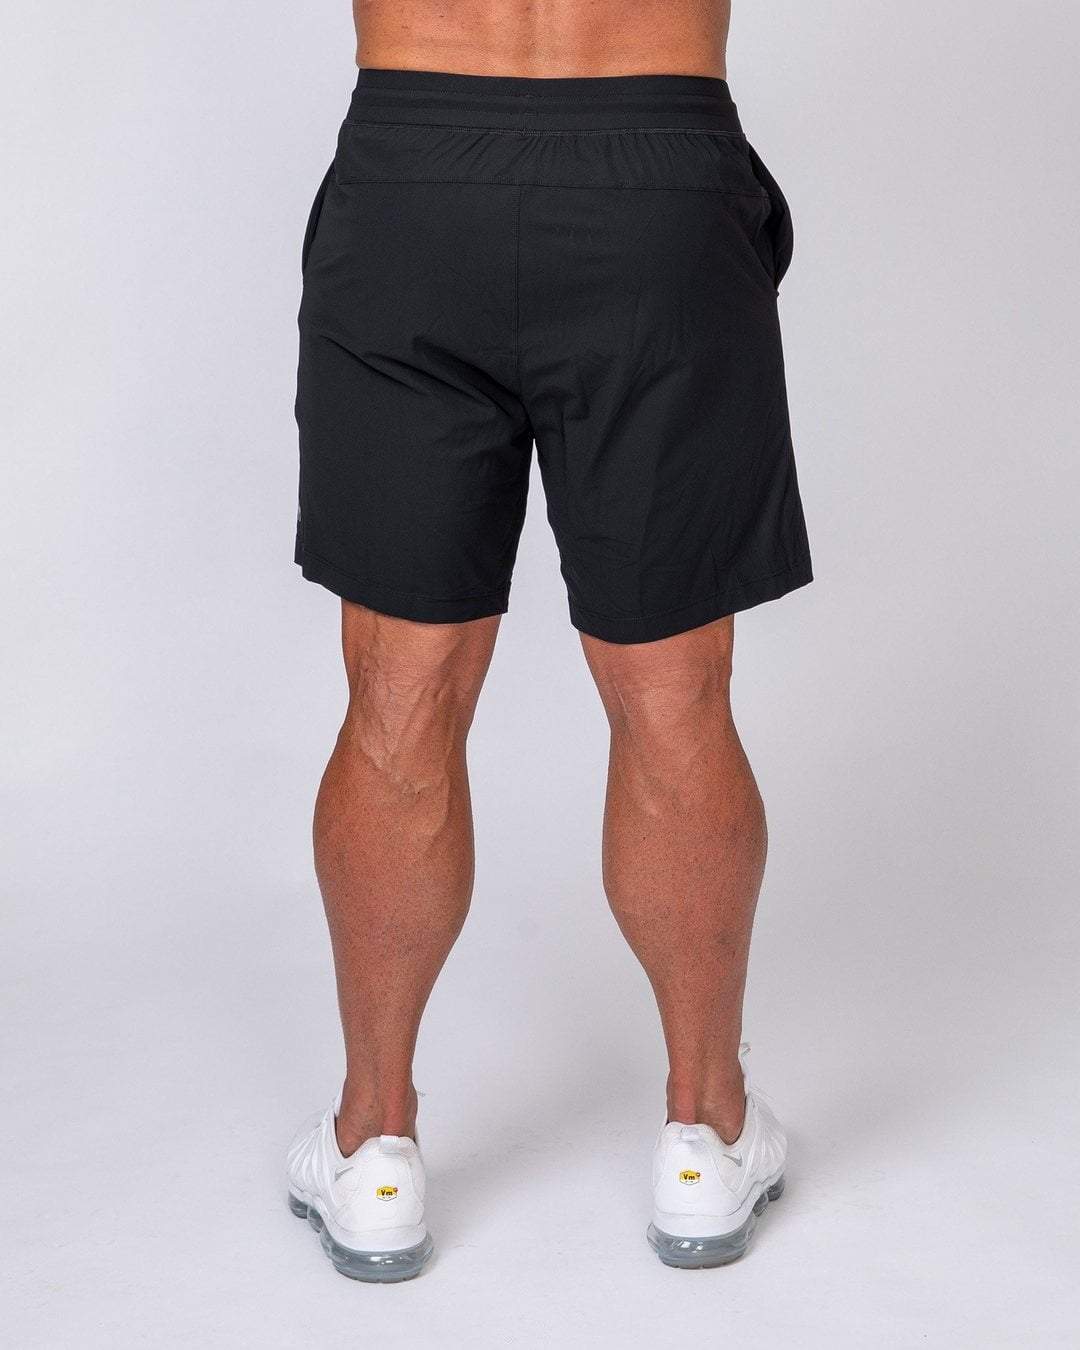 musclenation Mens Training Shorts - Black